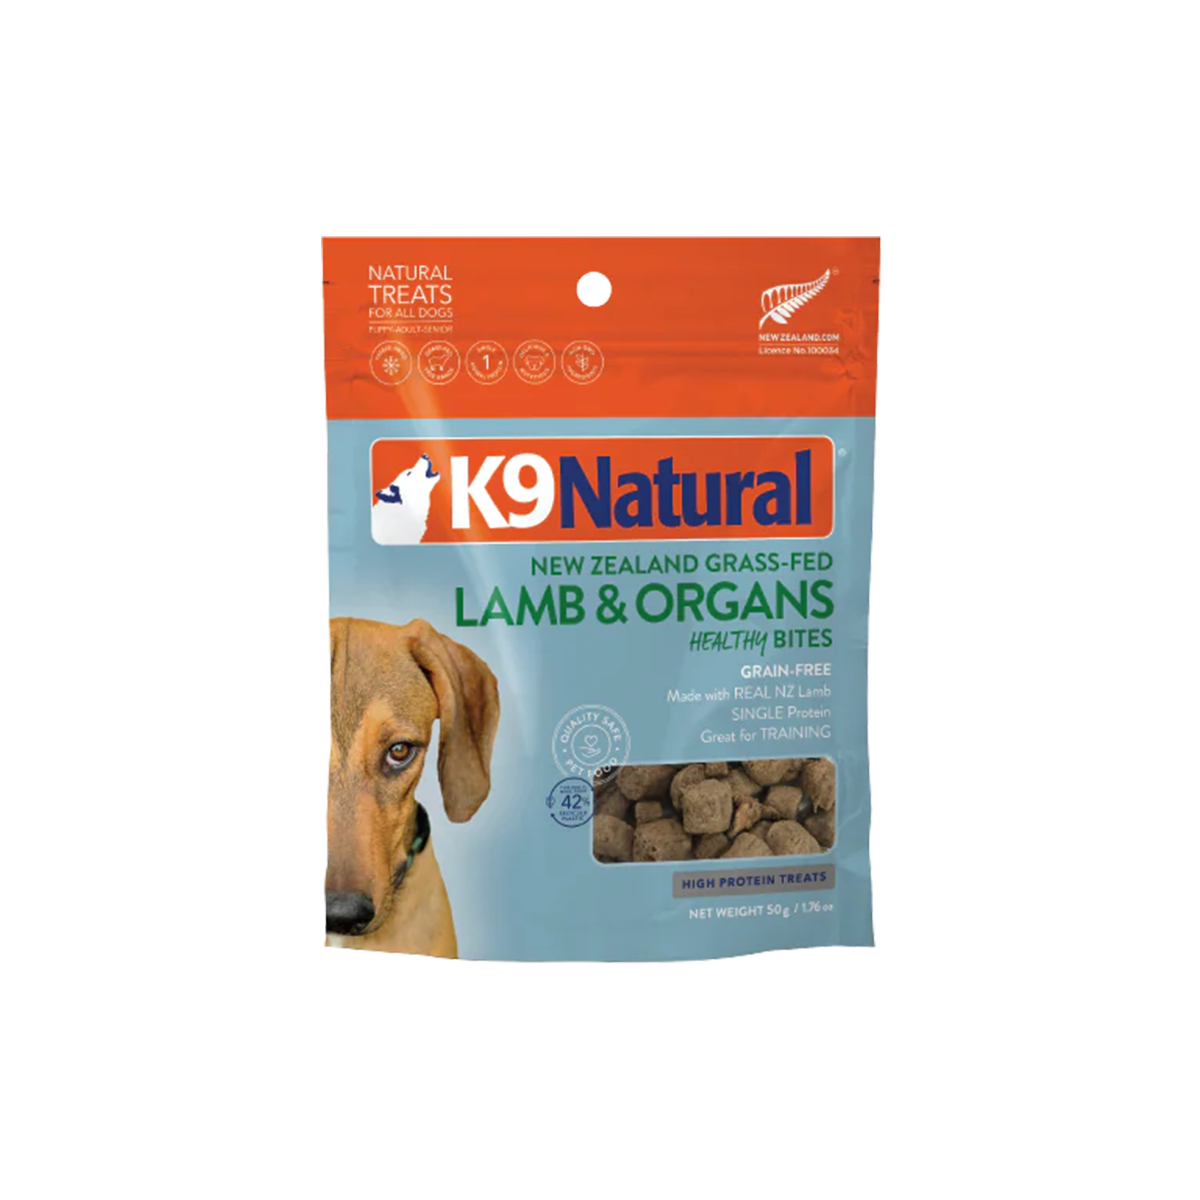 K9 Natural Freeze-Dried Healthy Bites Dog Treats - Lamb